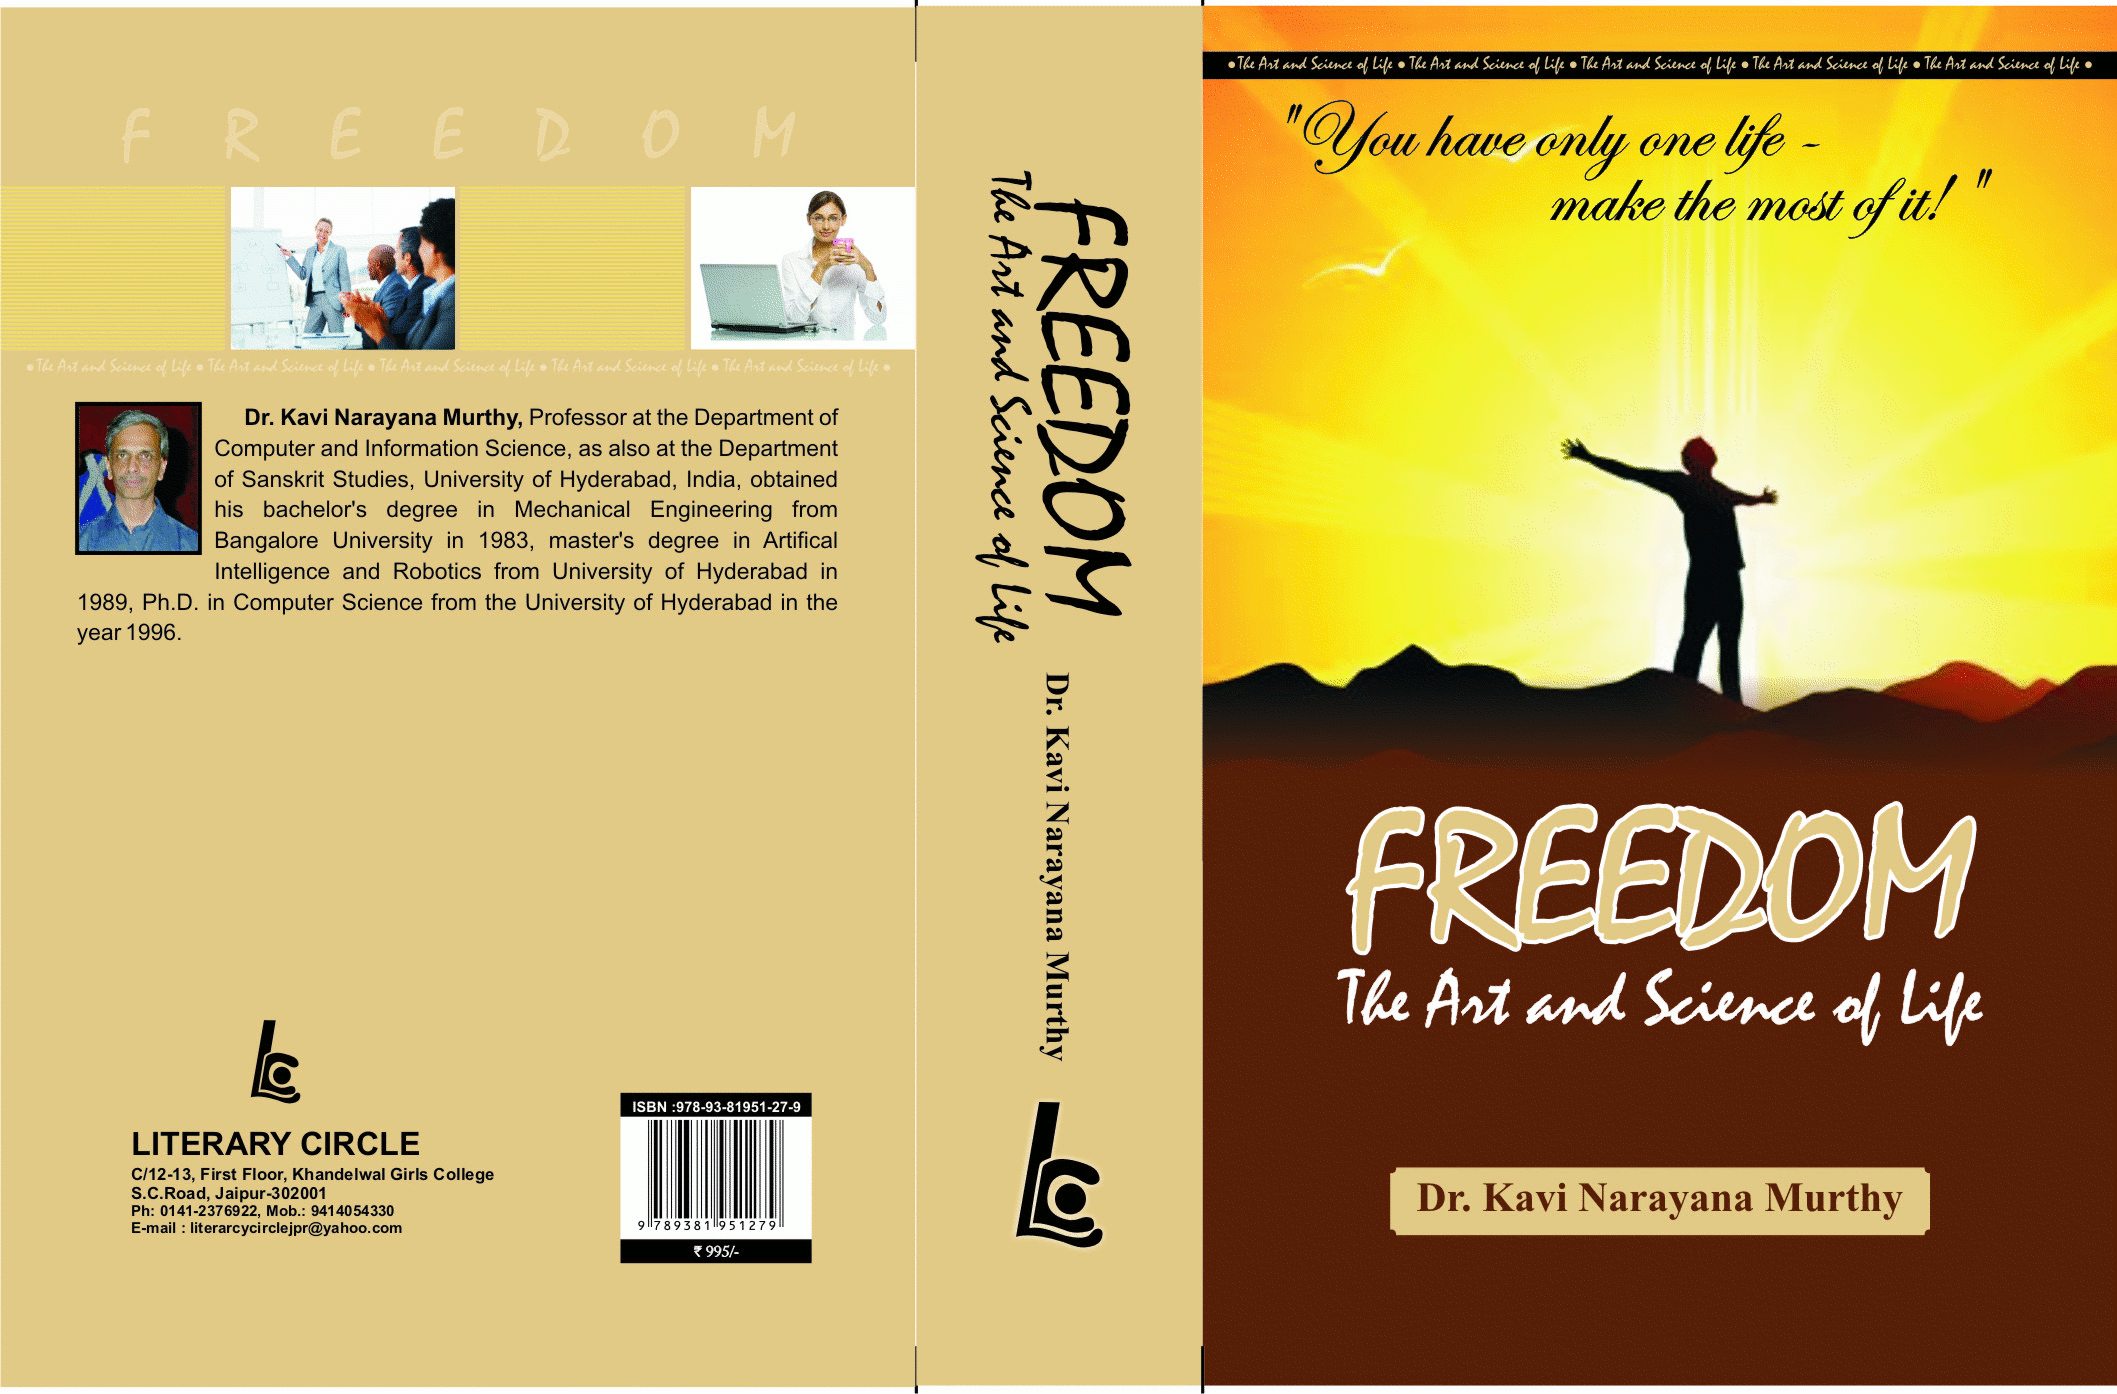 Freedom
Book